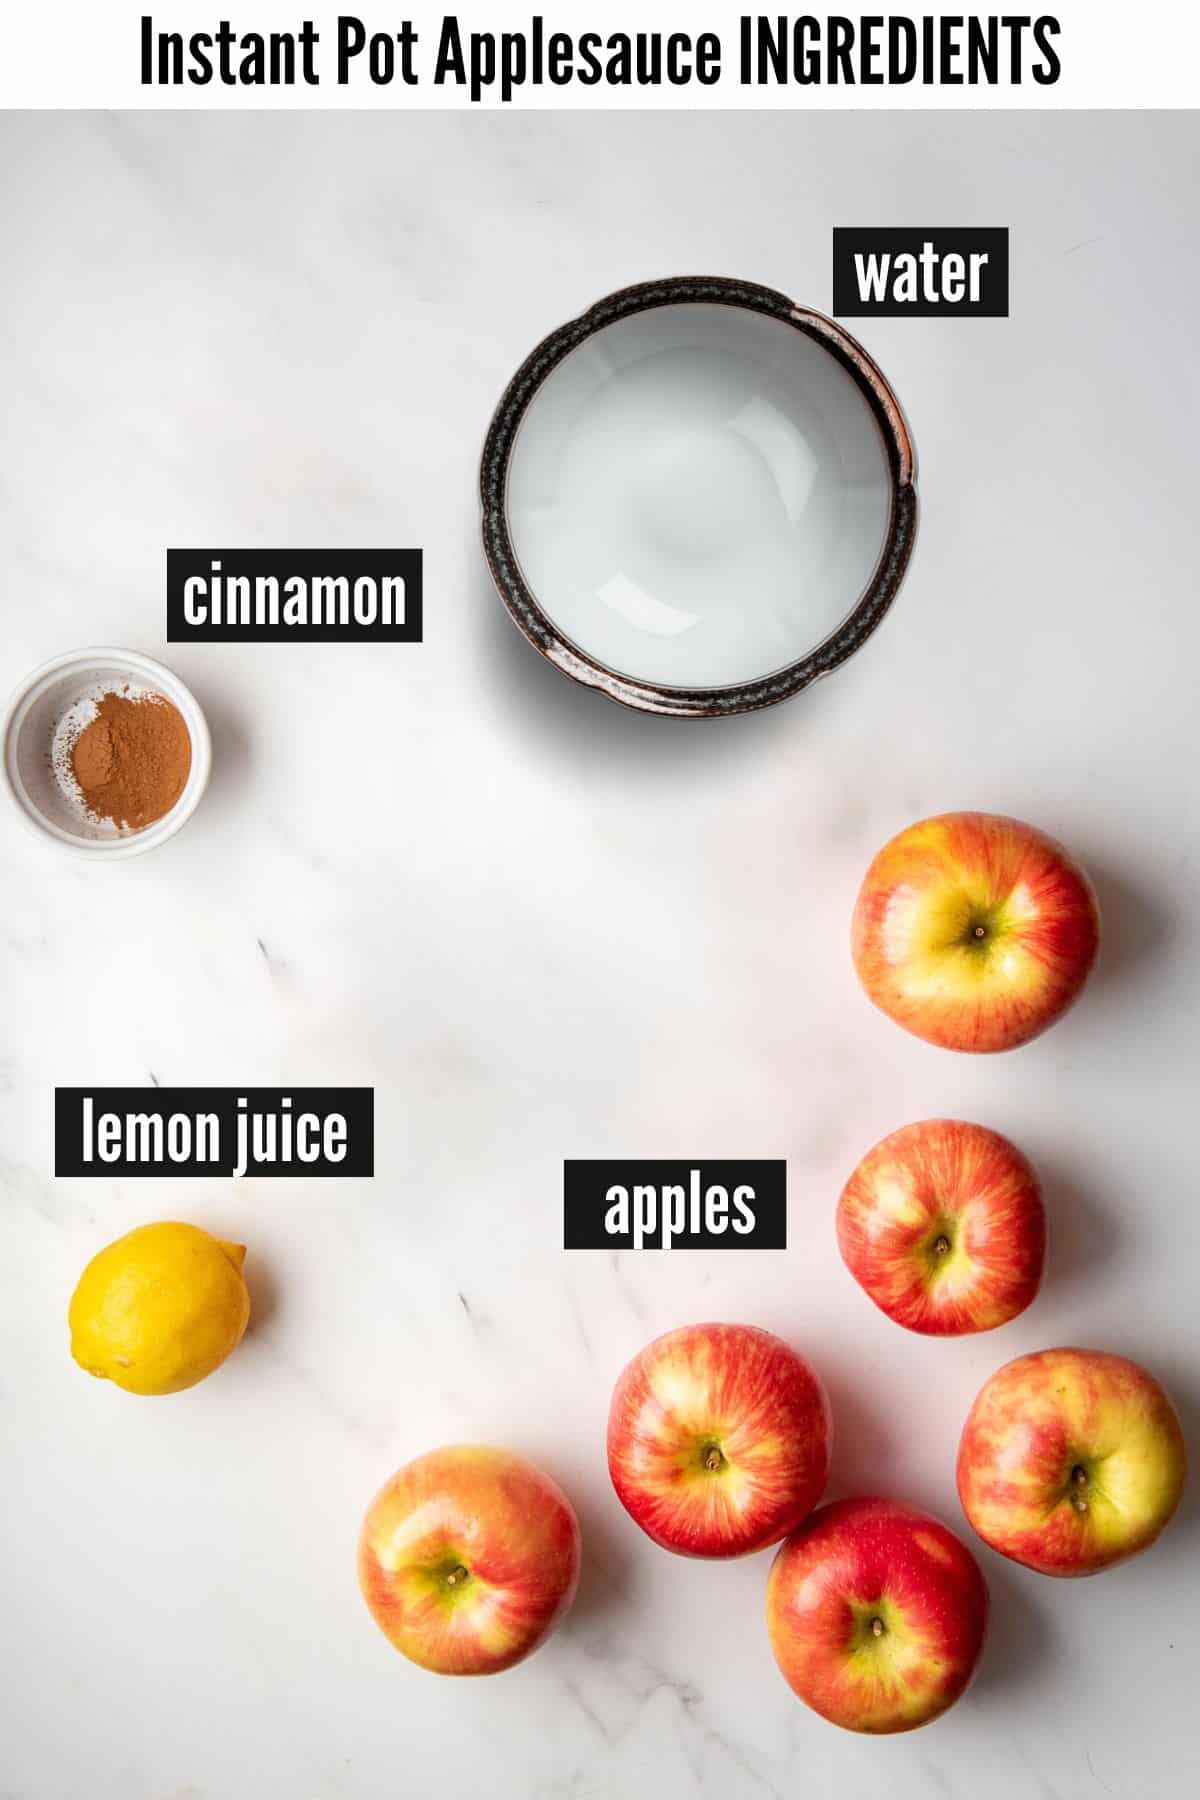 instant pot applesauce labelled ingredients.